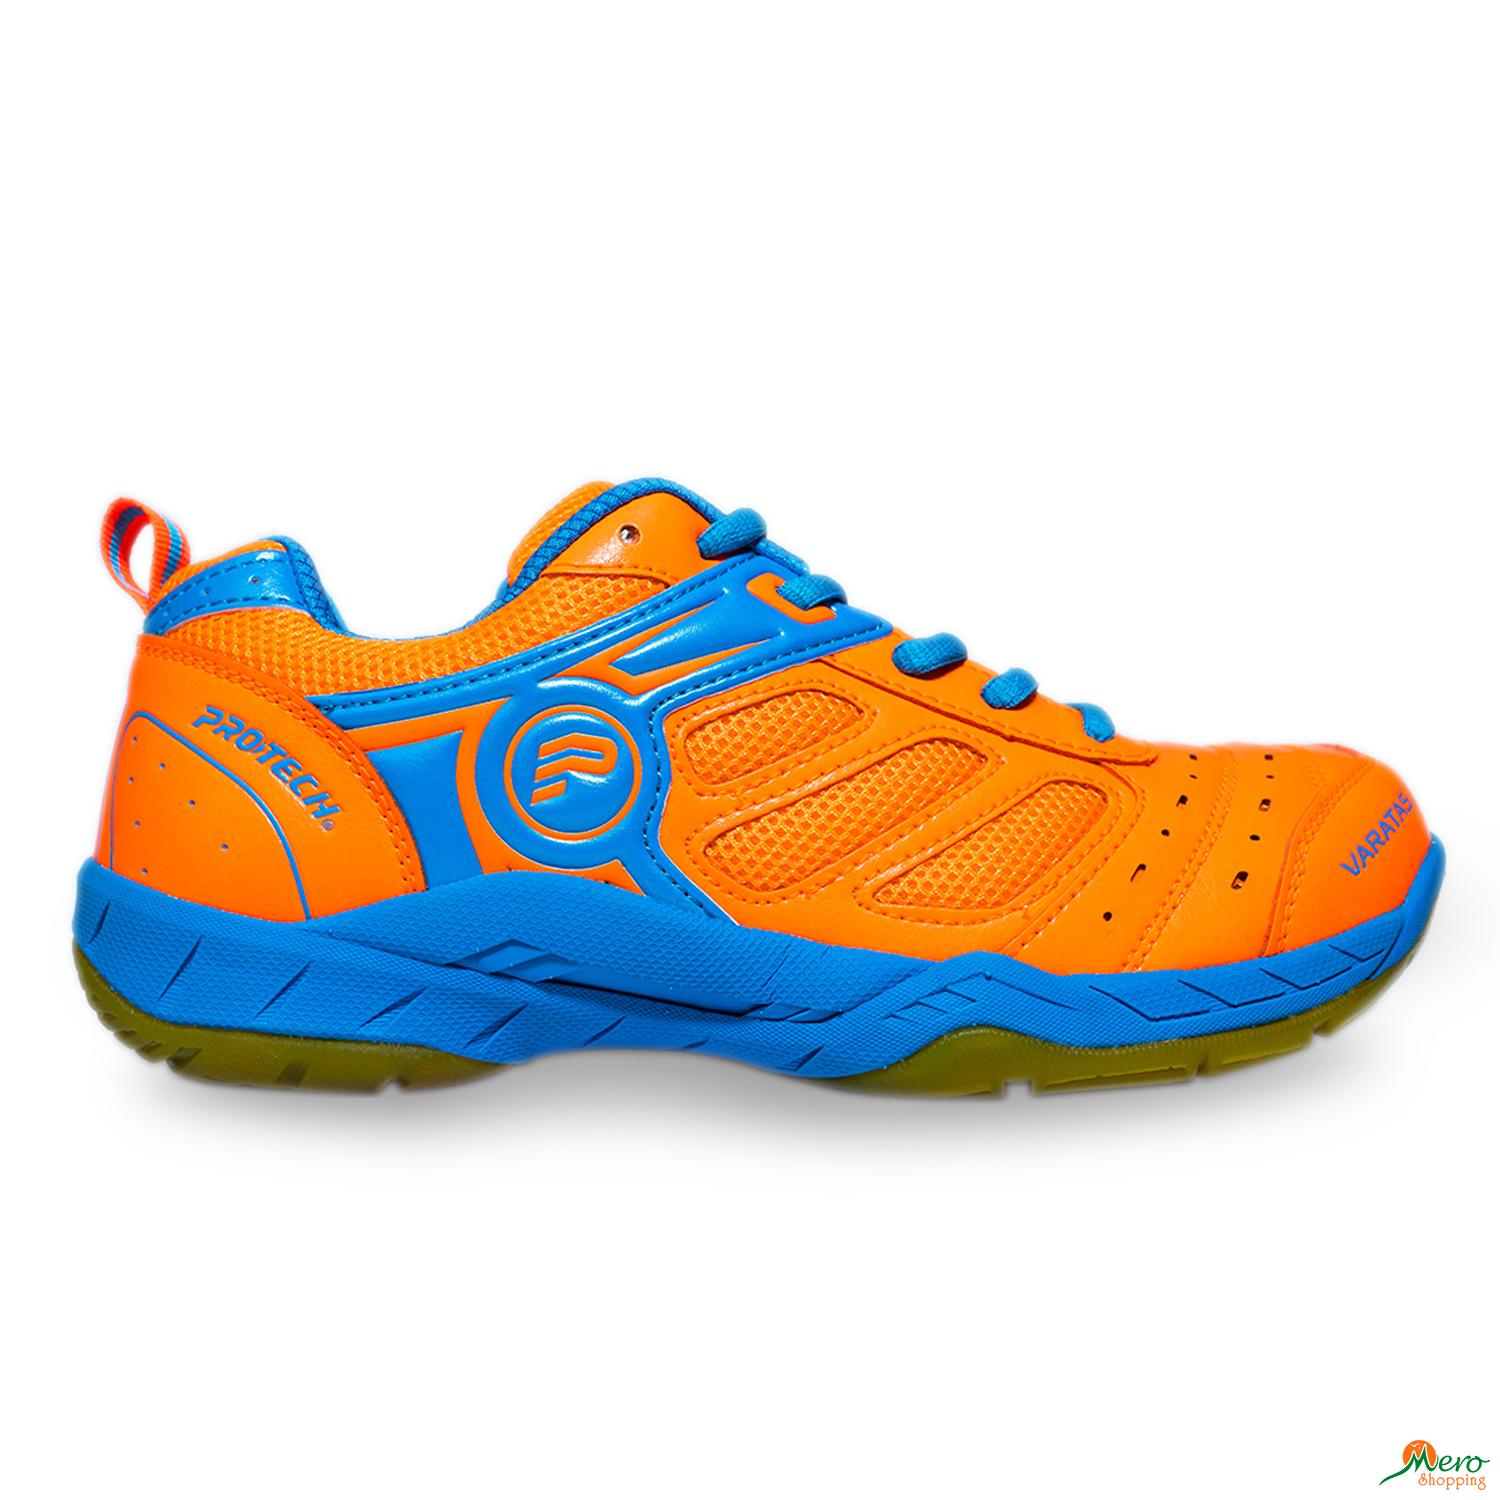 Protech varatas 6.0 Badminton Shoes (Blue/orange) 